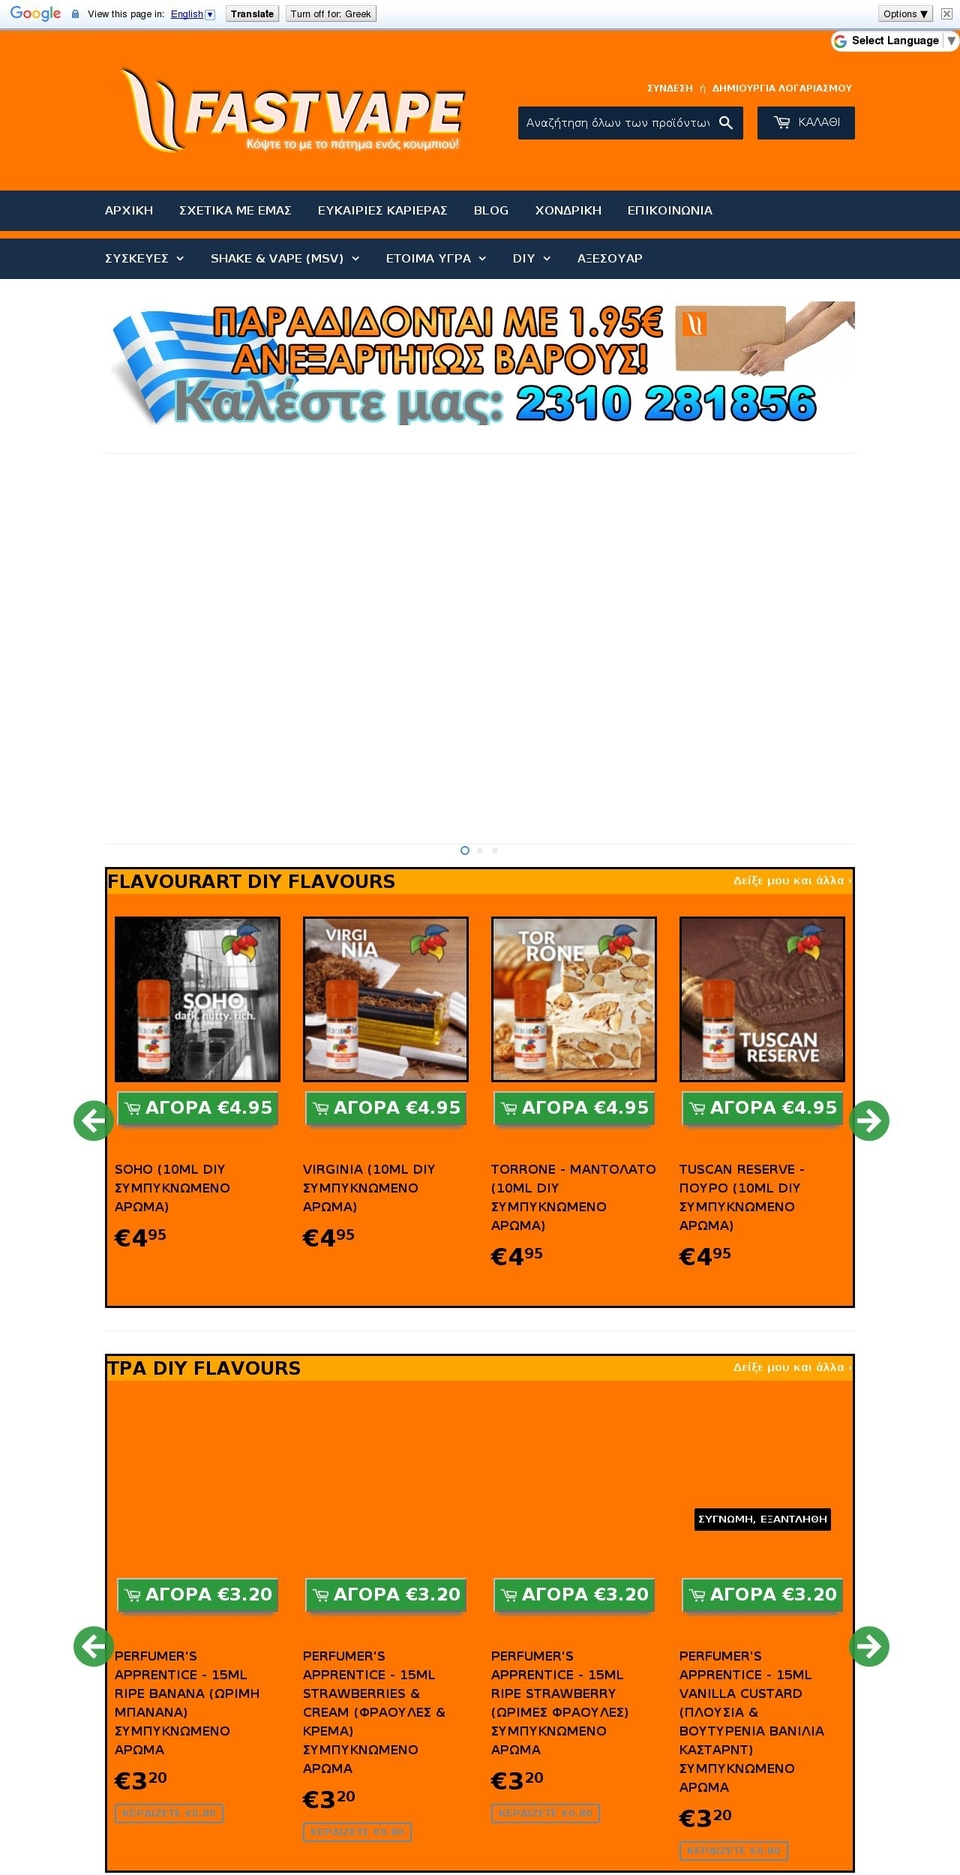 fastvape.gr shopify website screenshot